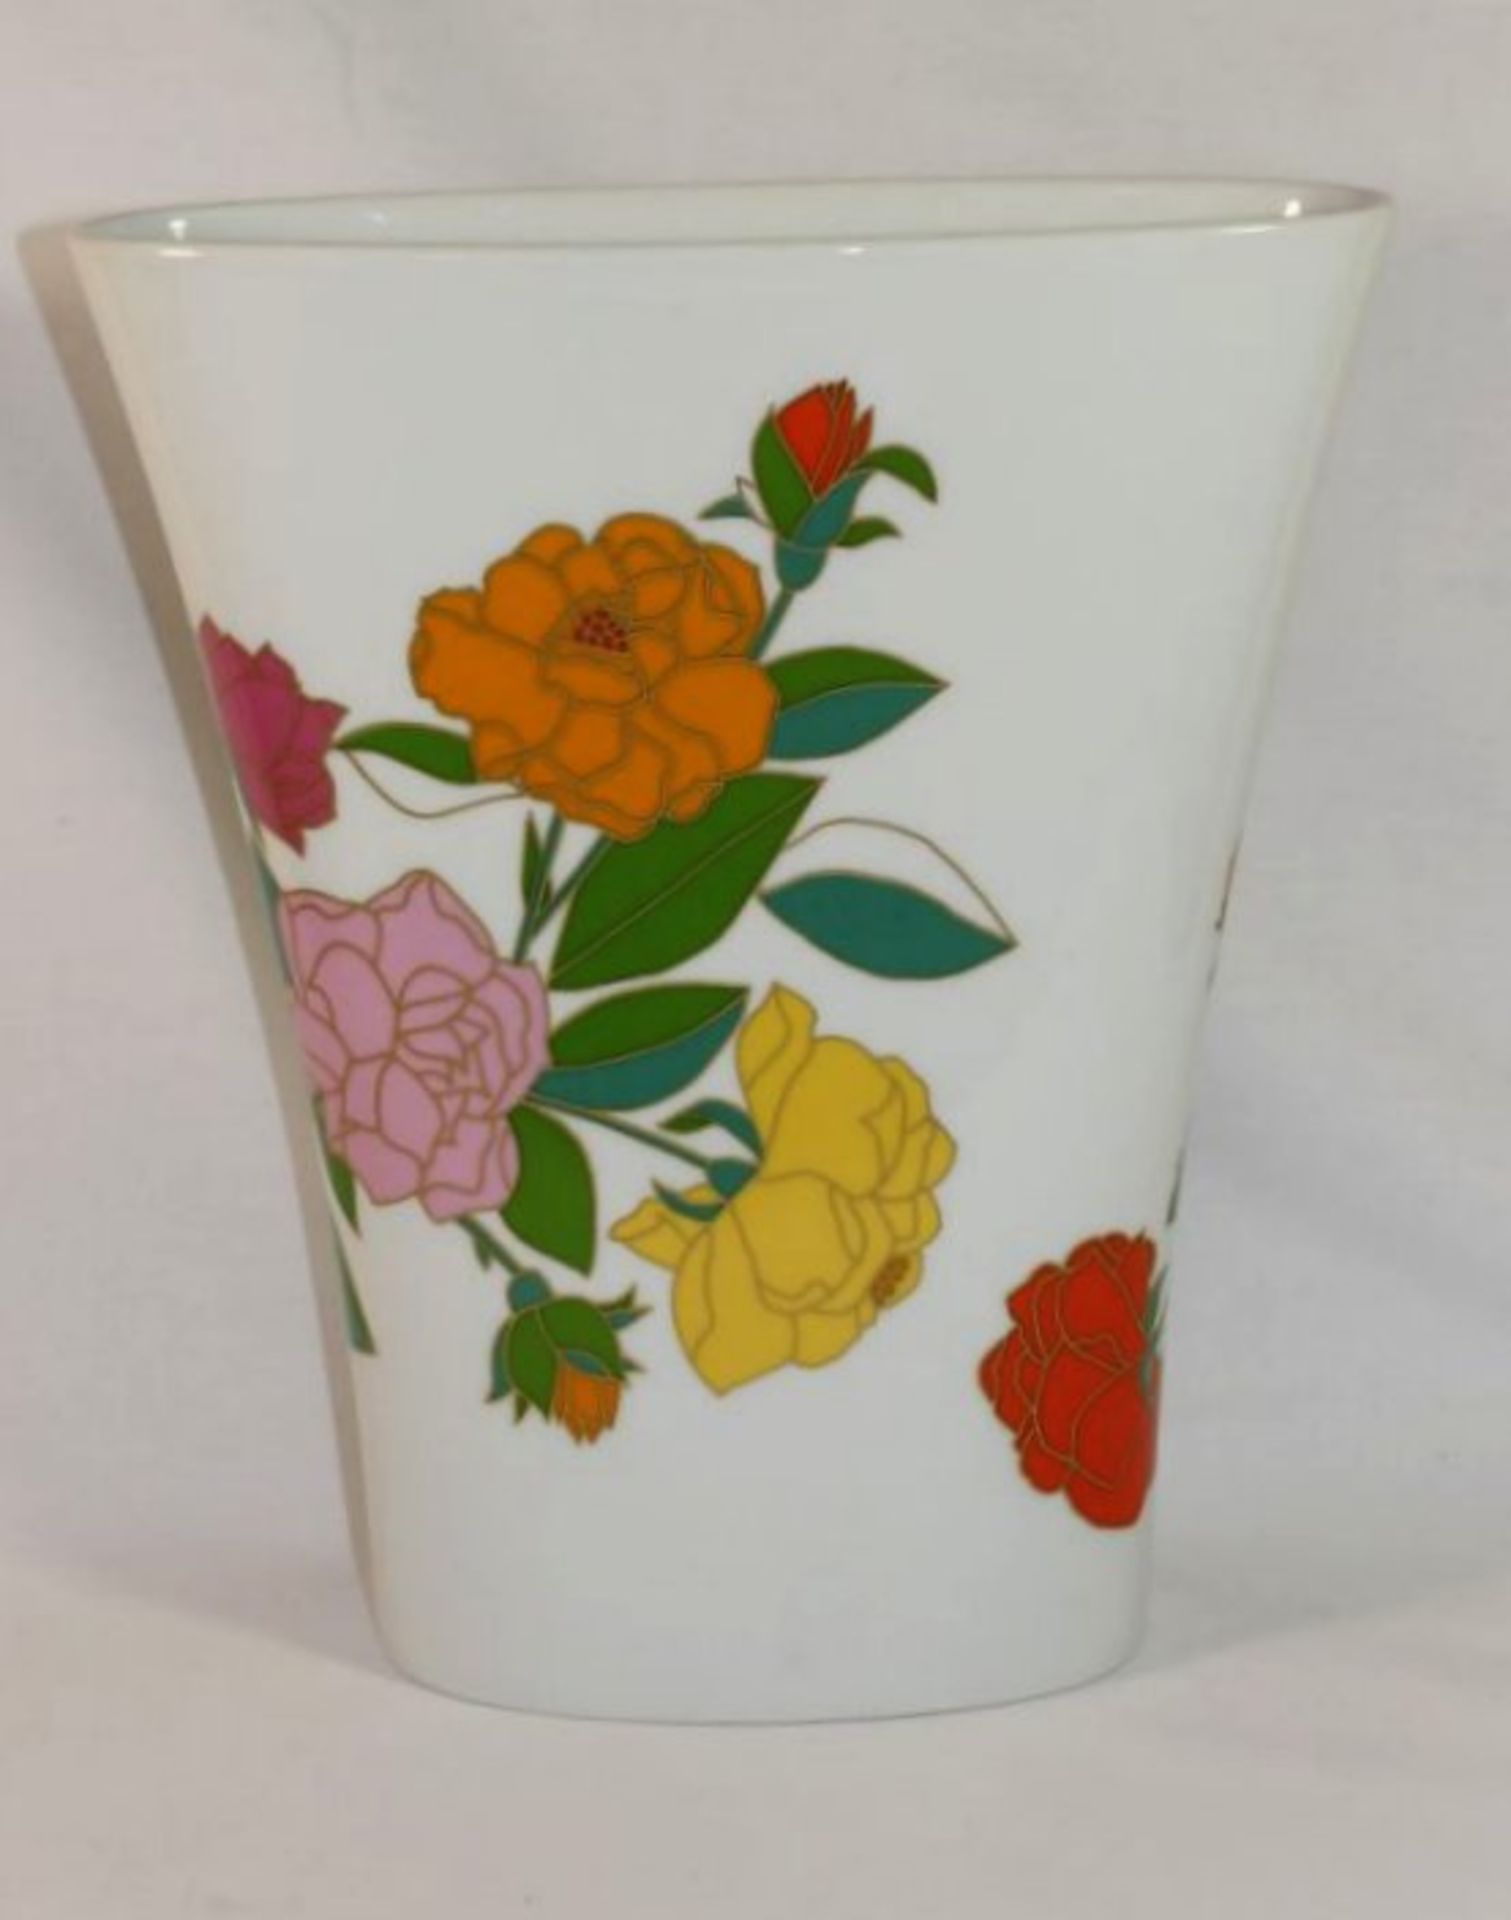 gr. Vase, Rosenthal studio-line, florale Bemalung, sifgniert W.Bauer, H-32,5cm B-27,5cm. - Bild 2 aus 4